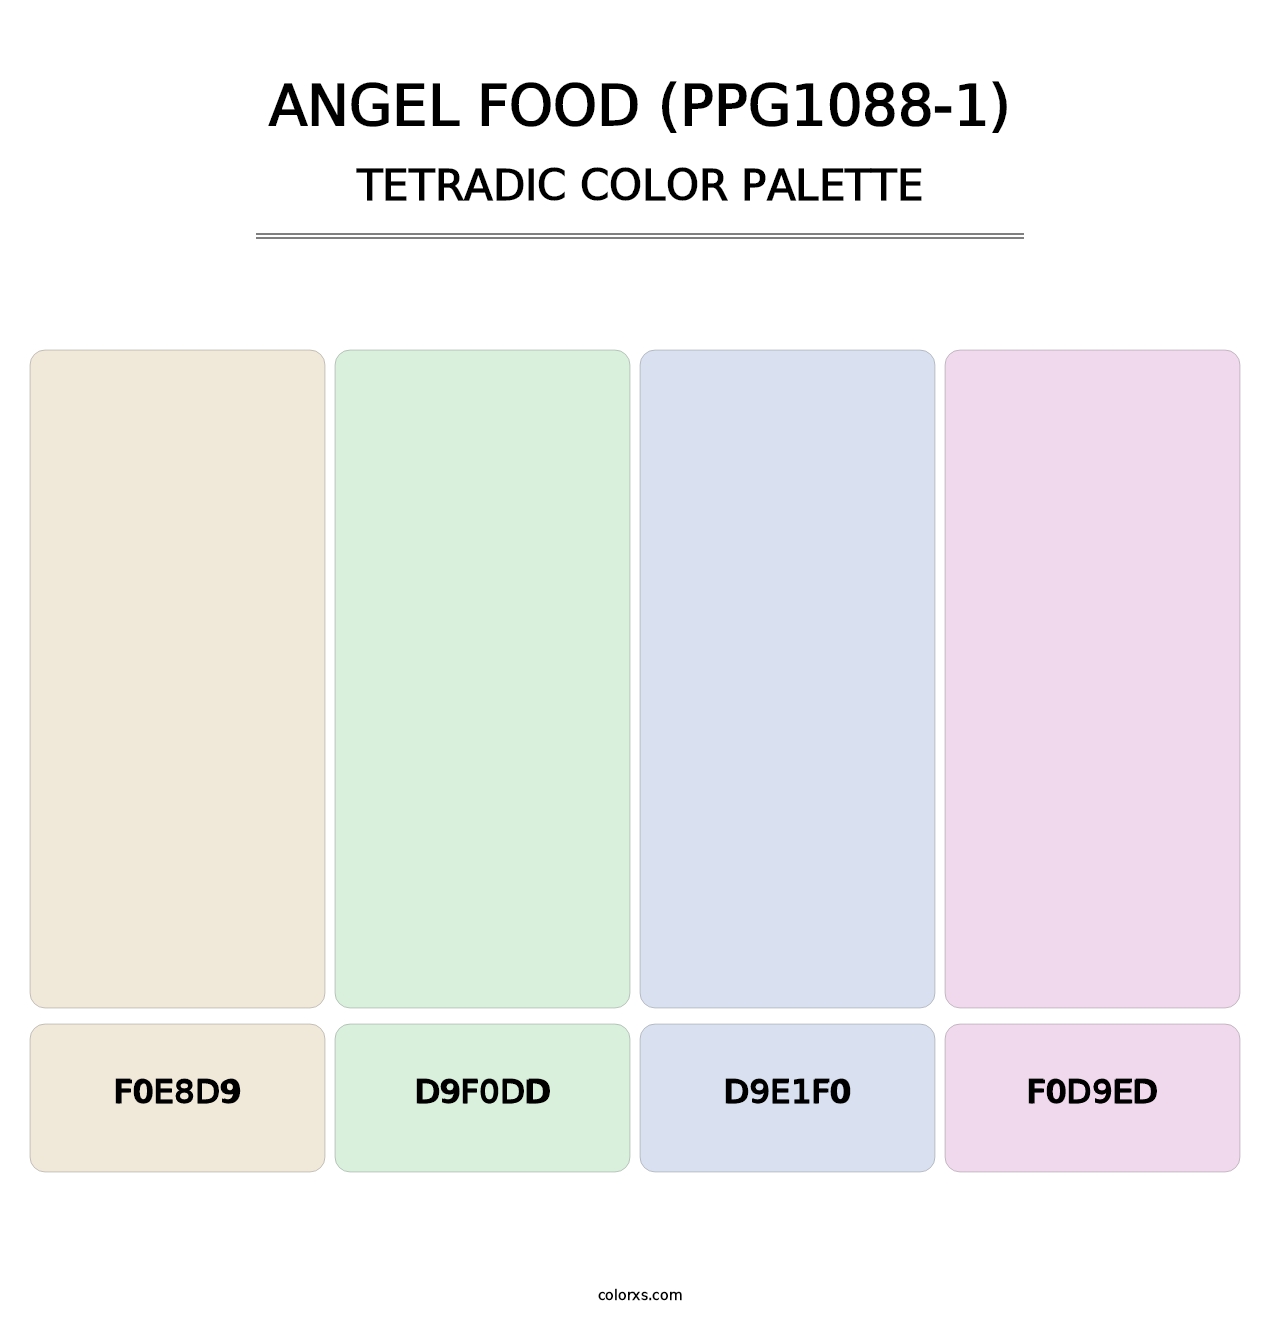 Angel Food (PPG1088-1) - Tetradic Color Palette